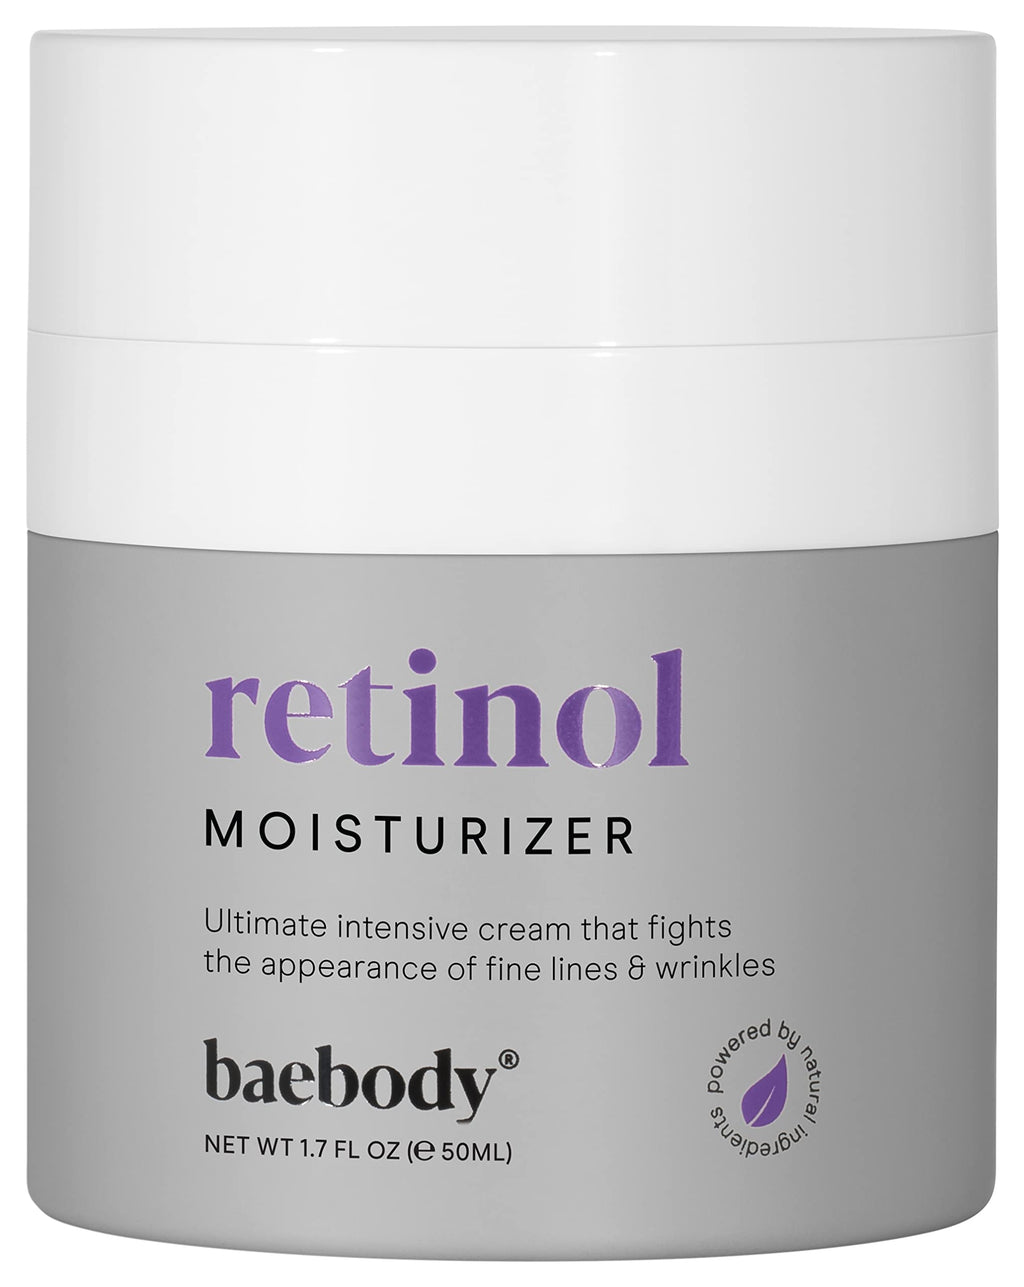 [Australia] - Baebody Retinol Moisturizer Cream for Face, Neck and Décolletage with Wrinkle and Acne Fighting Retinol, Jojoba Oil and Vitamin E, 1.7 Ounces 